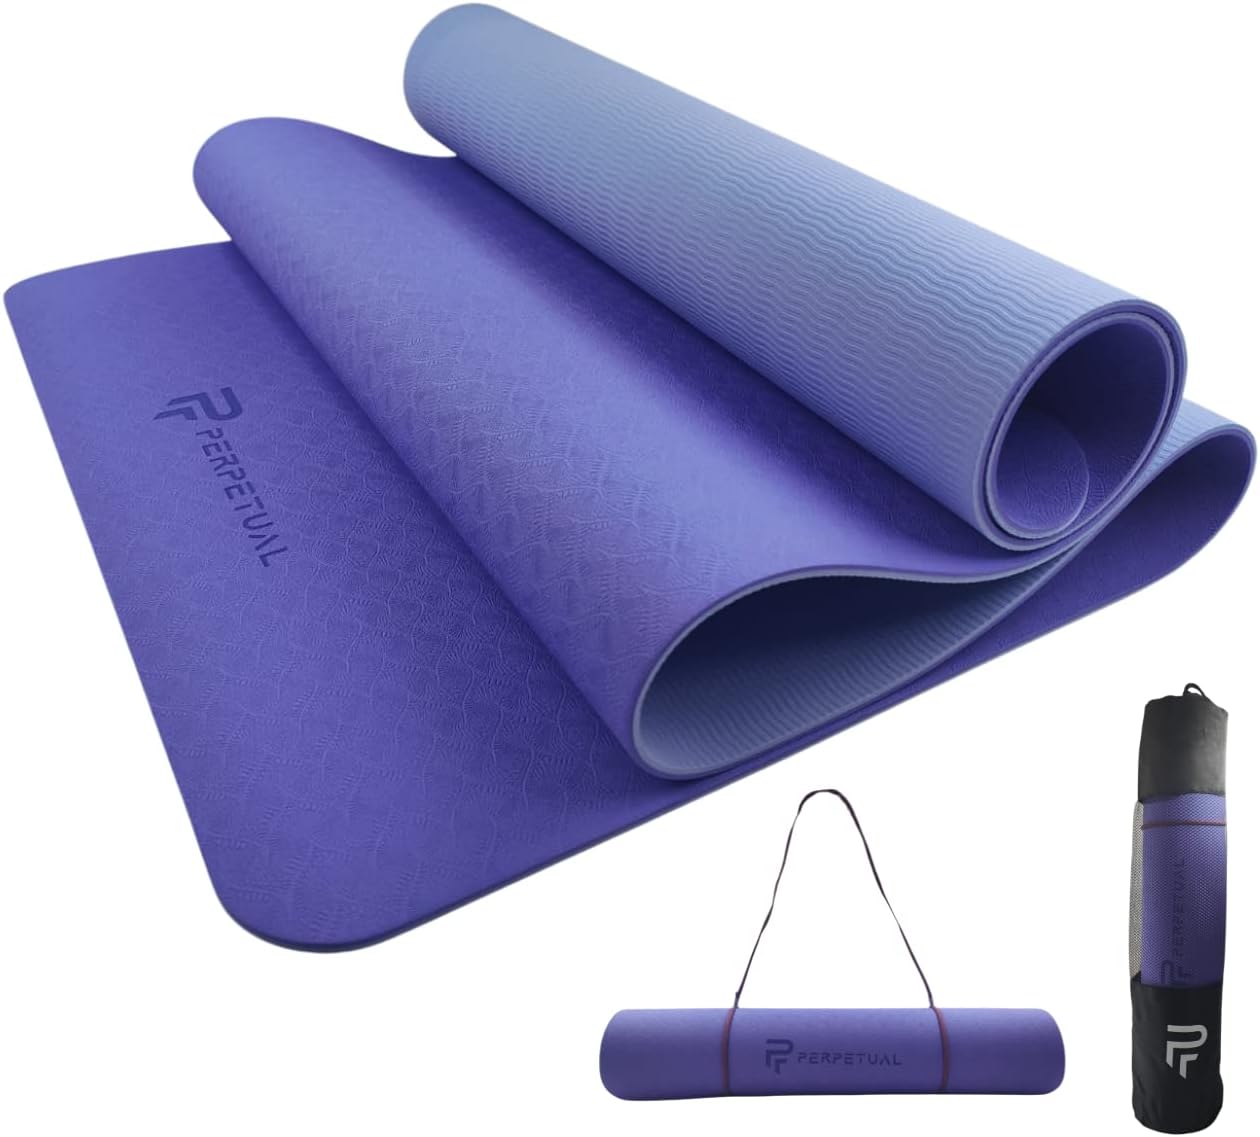 Esterilla Yoga Fitness Worpin Antideslizante - Outlet Exclusivo